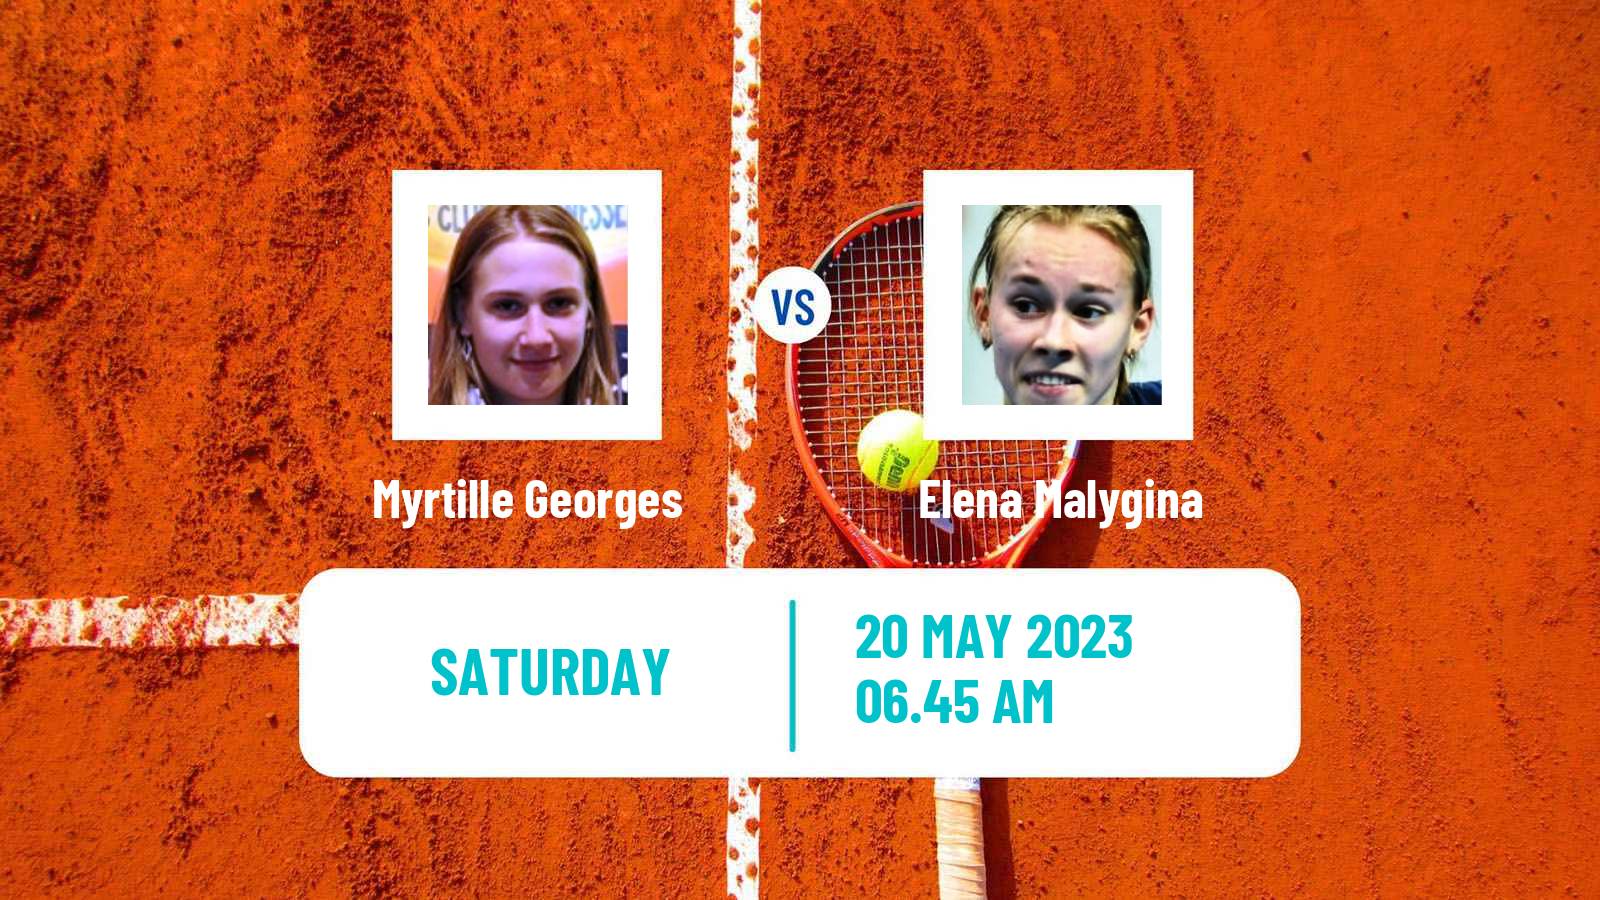 Tennis WTA Strasbourg Myrtille Georges - Elena Malygina